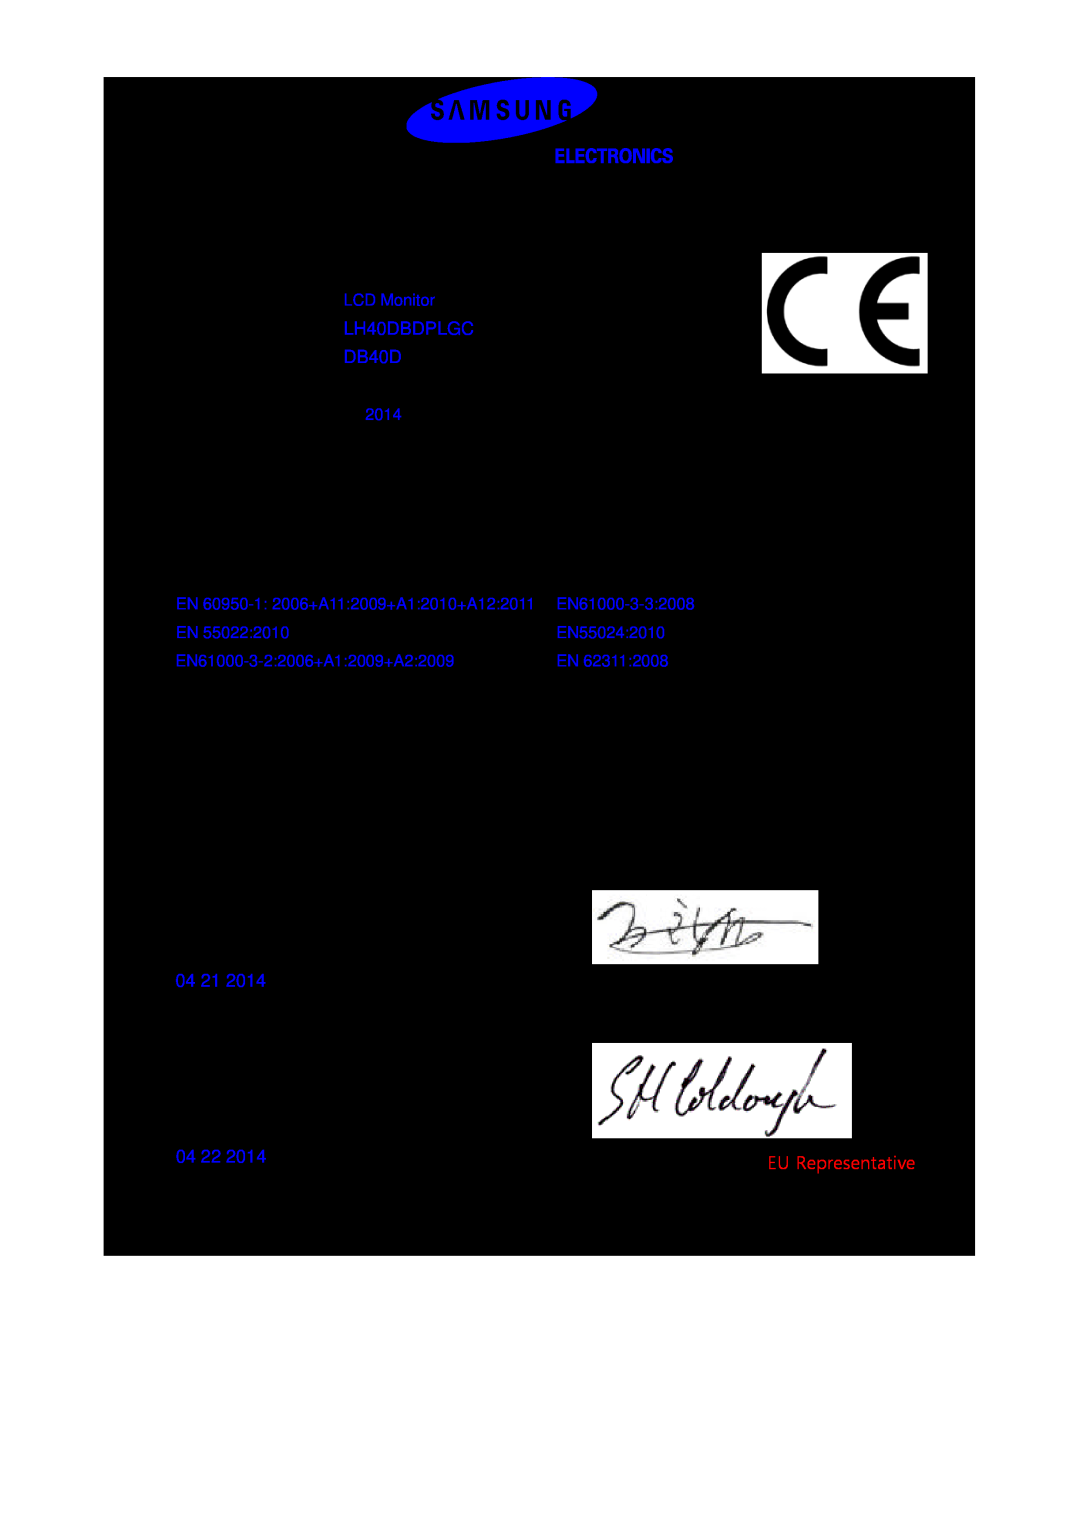 Samsung LH48DBDPLGC/EN, LH32DBDPLGC/EN, LH40DBDPLGC/EN manual Declaration of Conformity, DB32D, 04 21, 04 22 